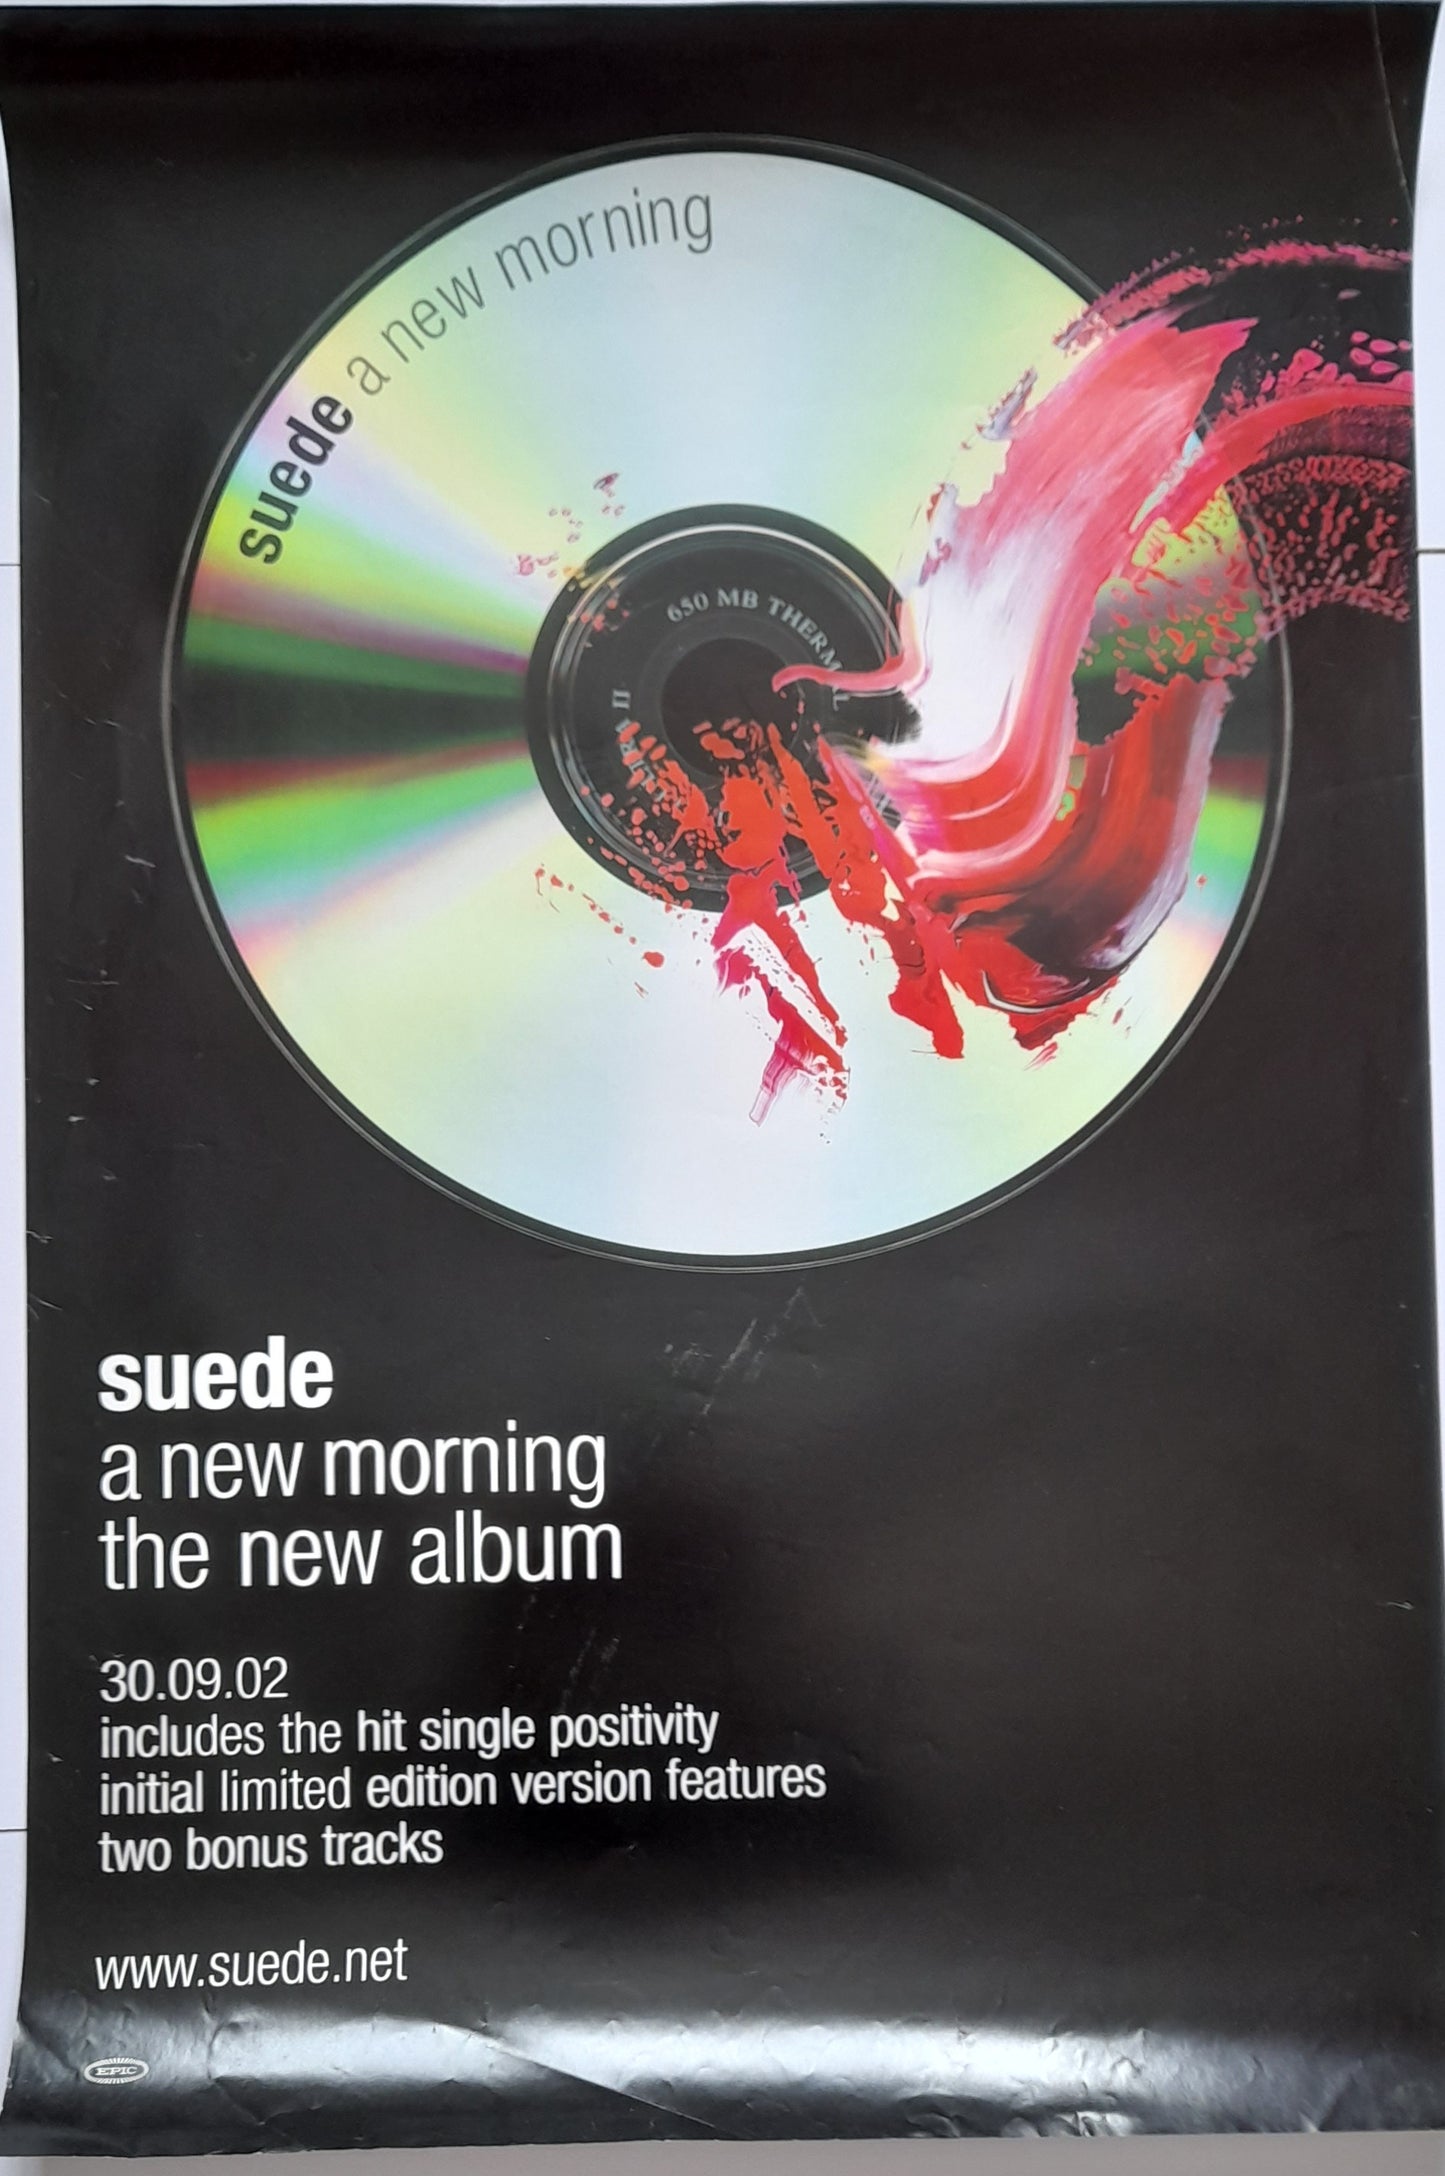 Suede a new morning album UK Promotional Poster - RewindPressPlay